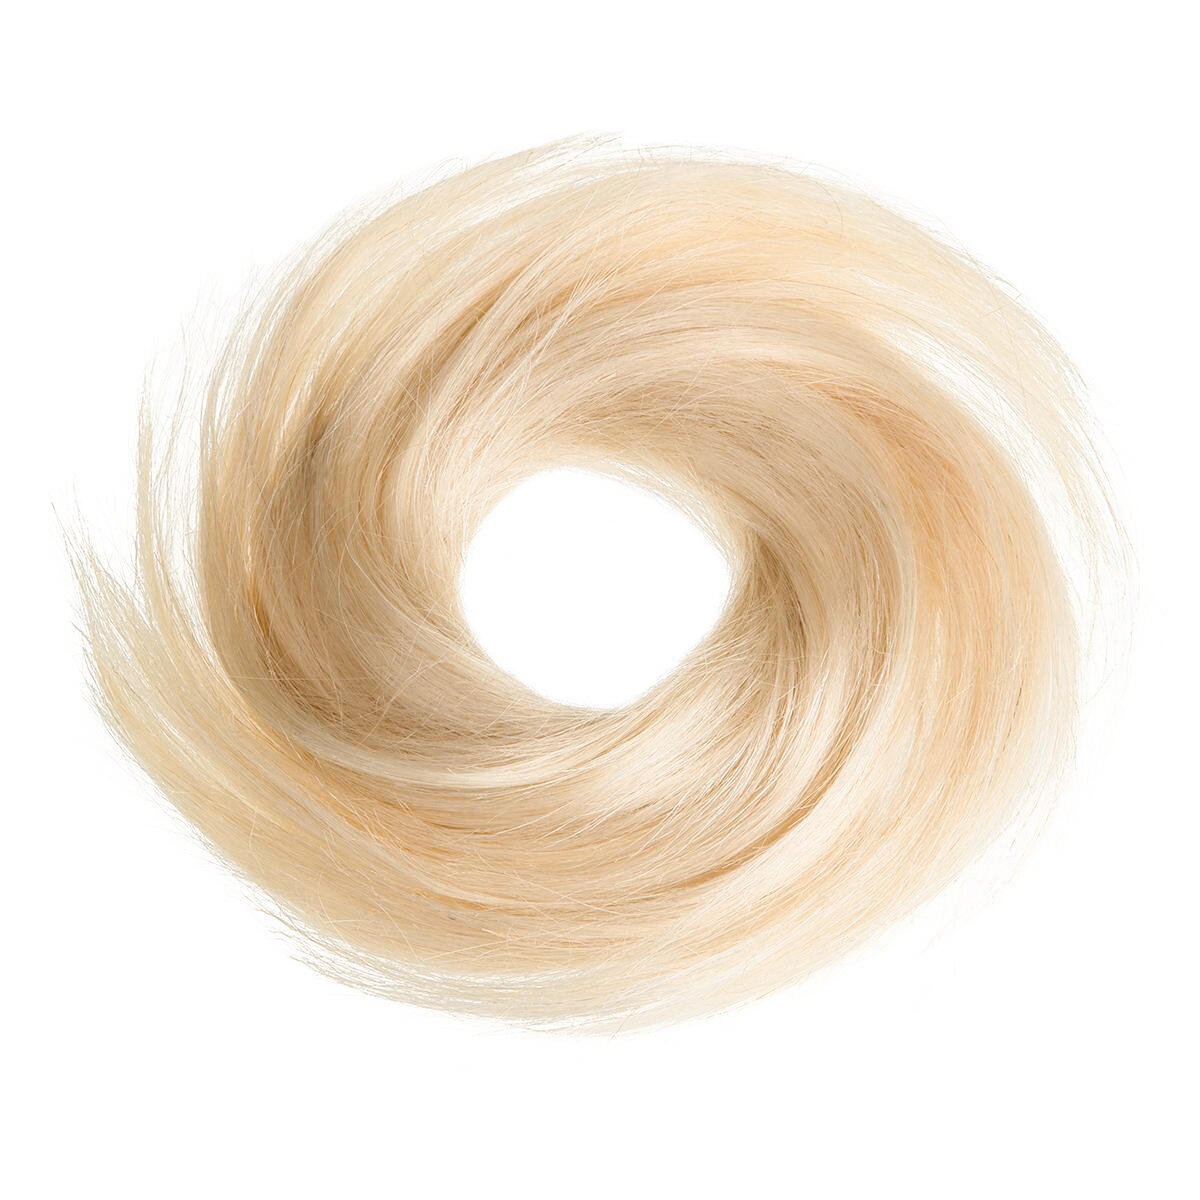 Hair Scrunchie 20 G Scrunchie with real hair 8.0 Light Golden Blonde